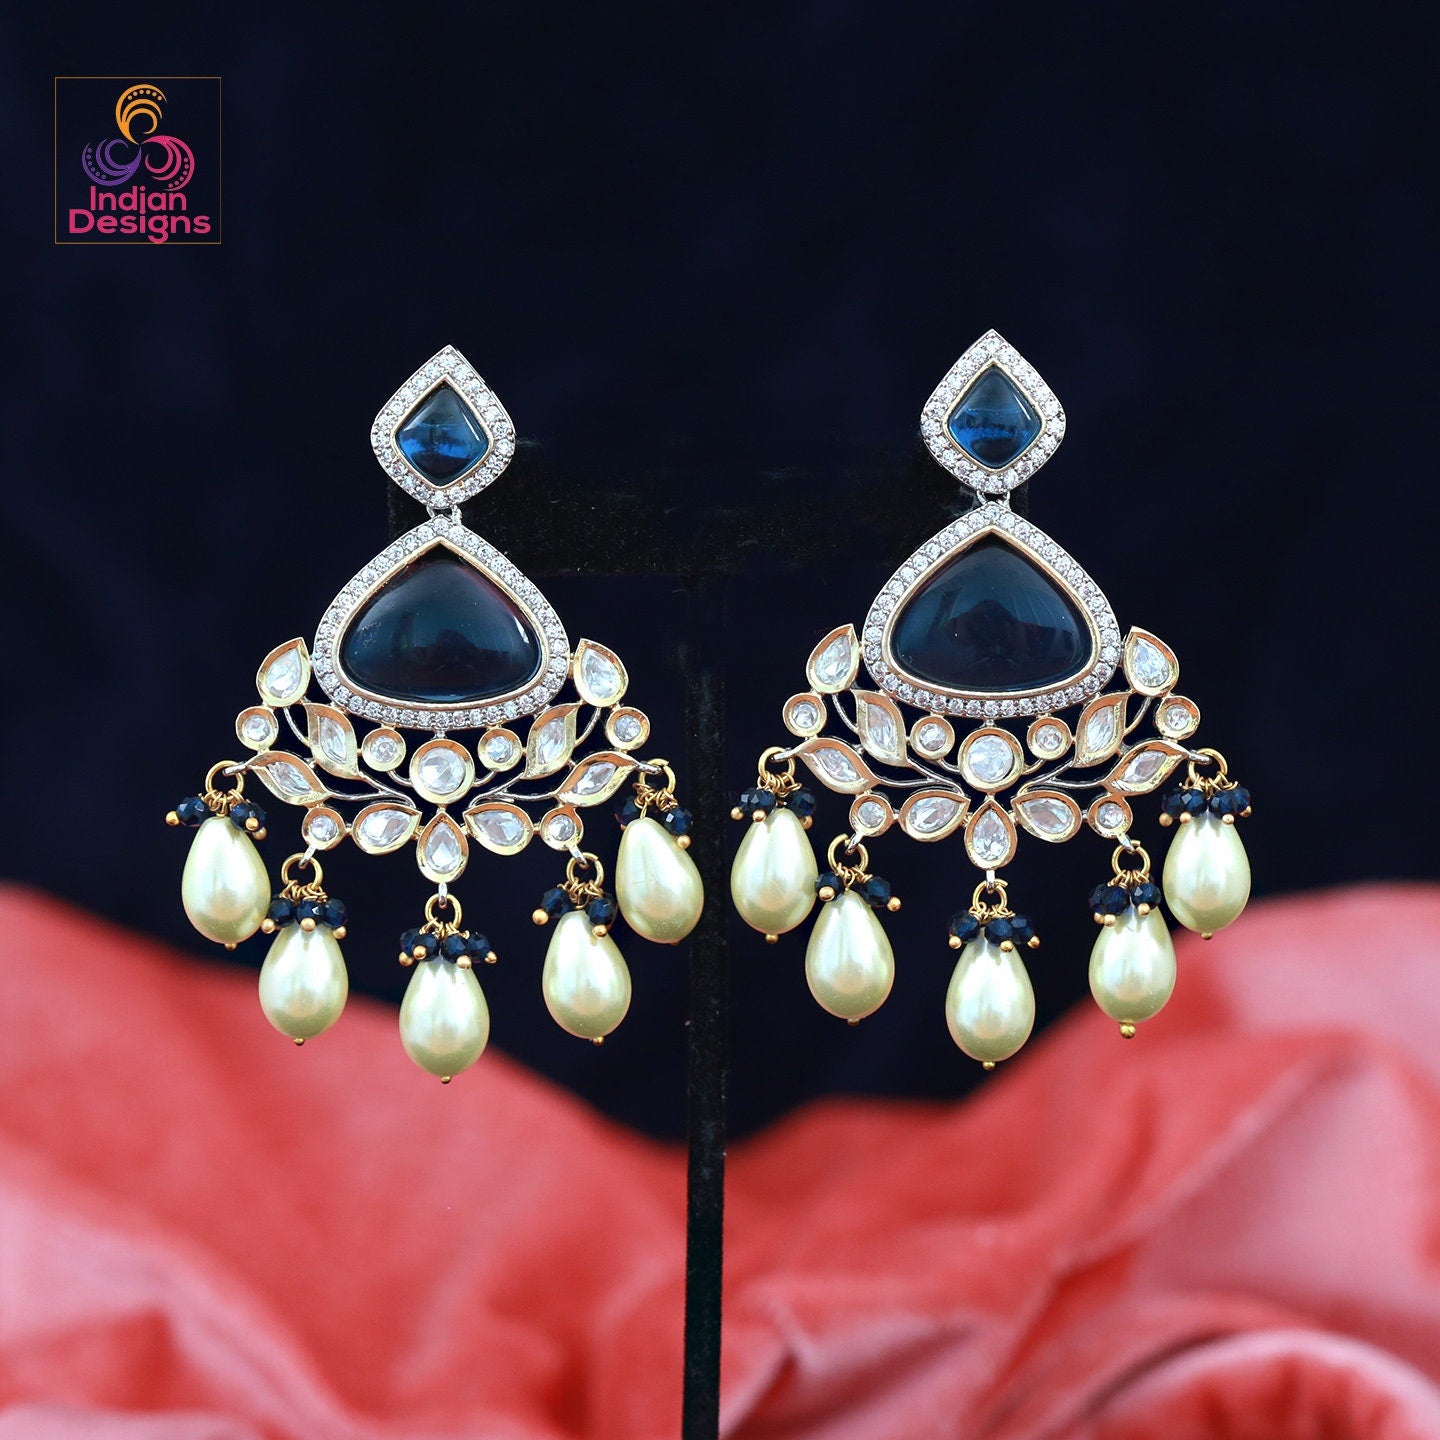 Kundan bridal earrings | Gold Plated Kundan Earrings with Pearl drops | Stylish Statement Earrings wedding | Indian Wedding Bridal Jewelry